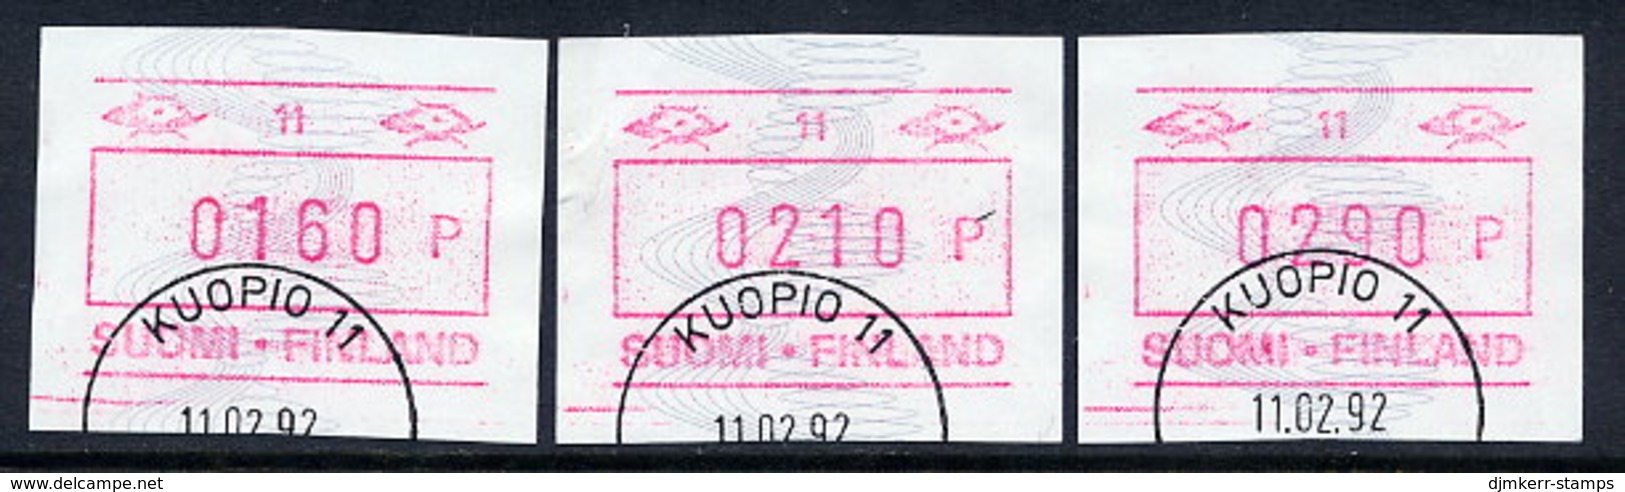 FINLAND 1990 Definitive With ATM Number , 3 Different Values Used .Michel 8 - Viñetas De Franqueo [ATM]